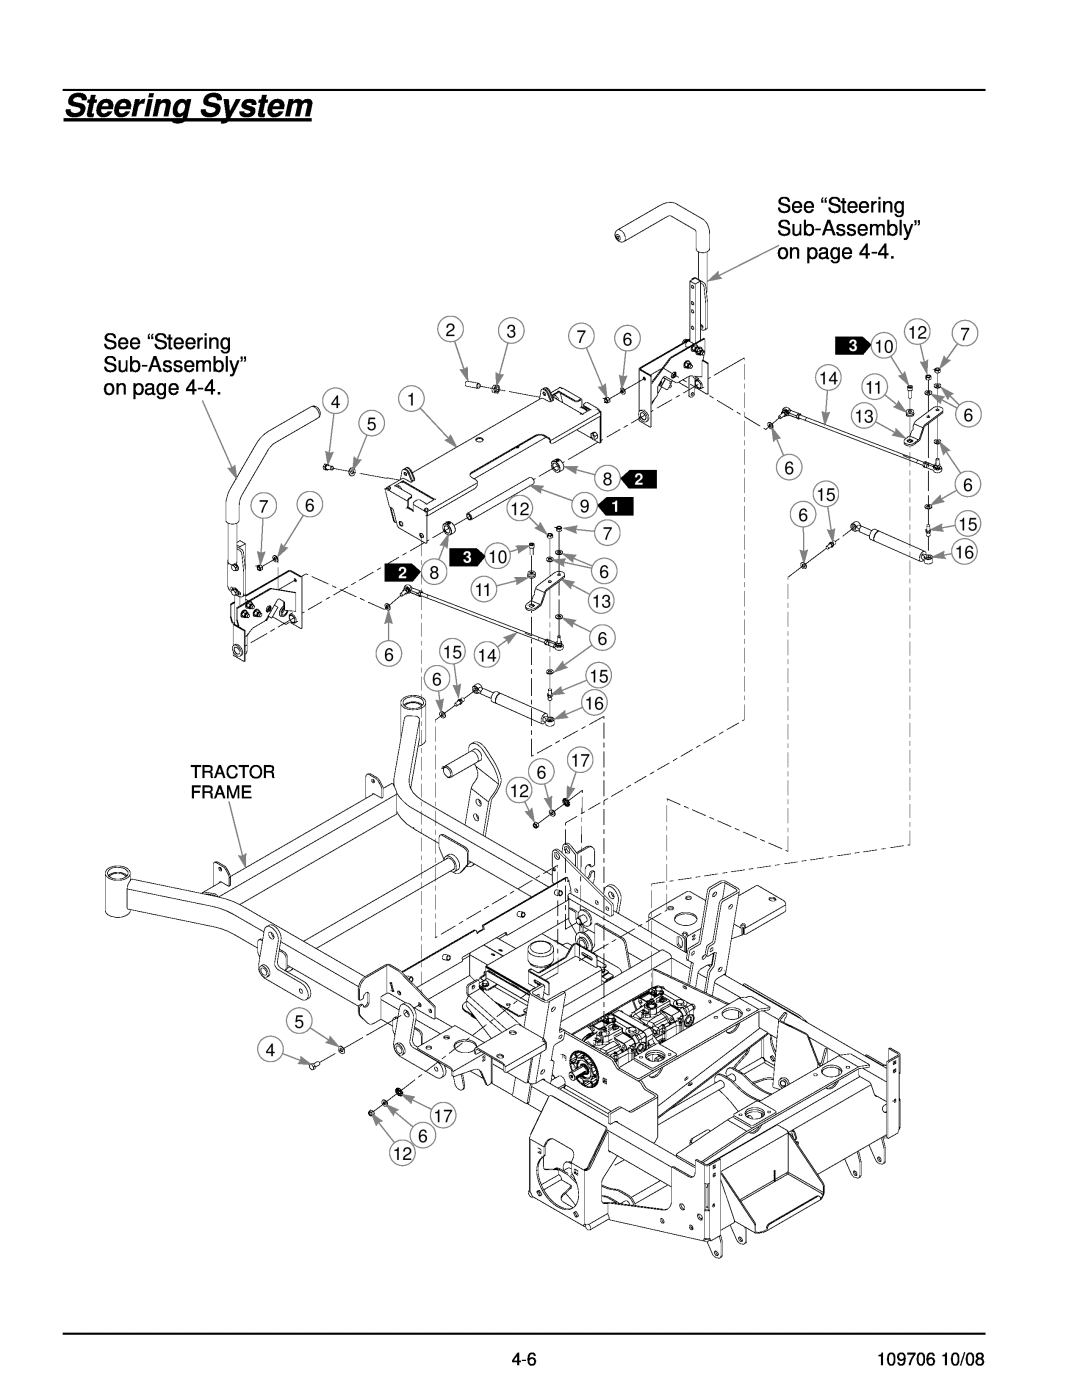 Hustler Turf Diesel Z manual Steering System, See “Steering Sub-Assembly” on page 